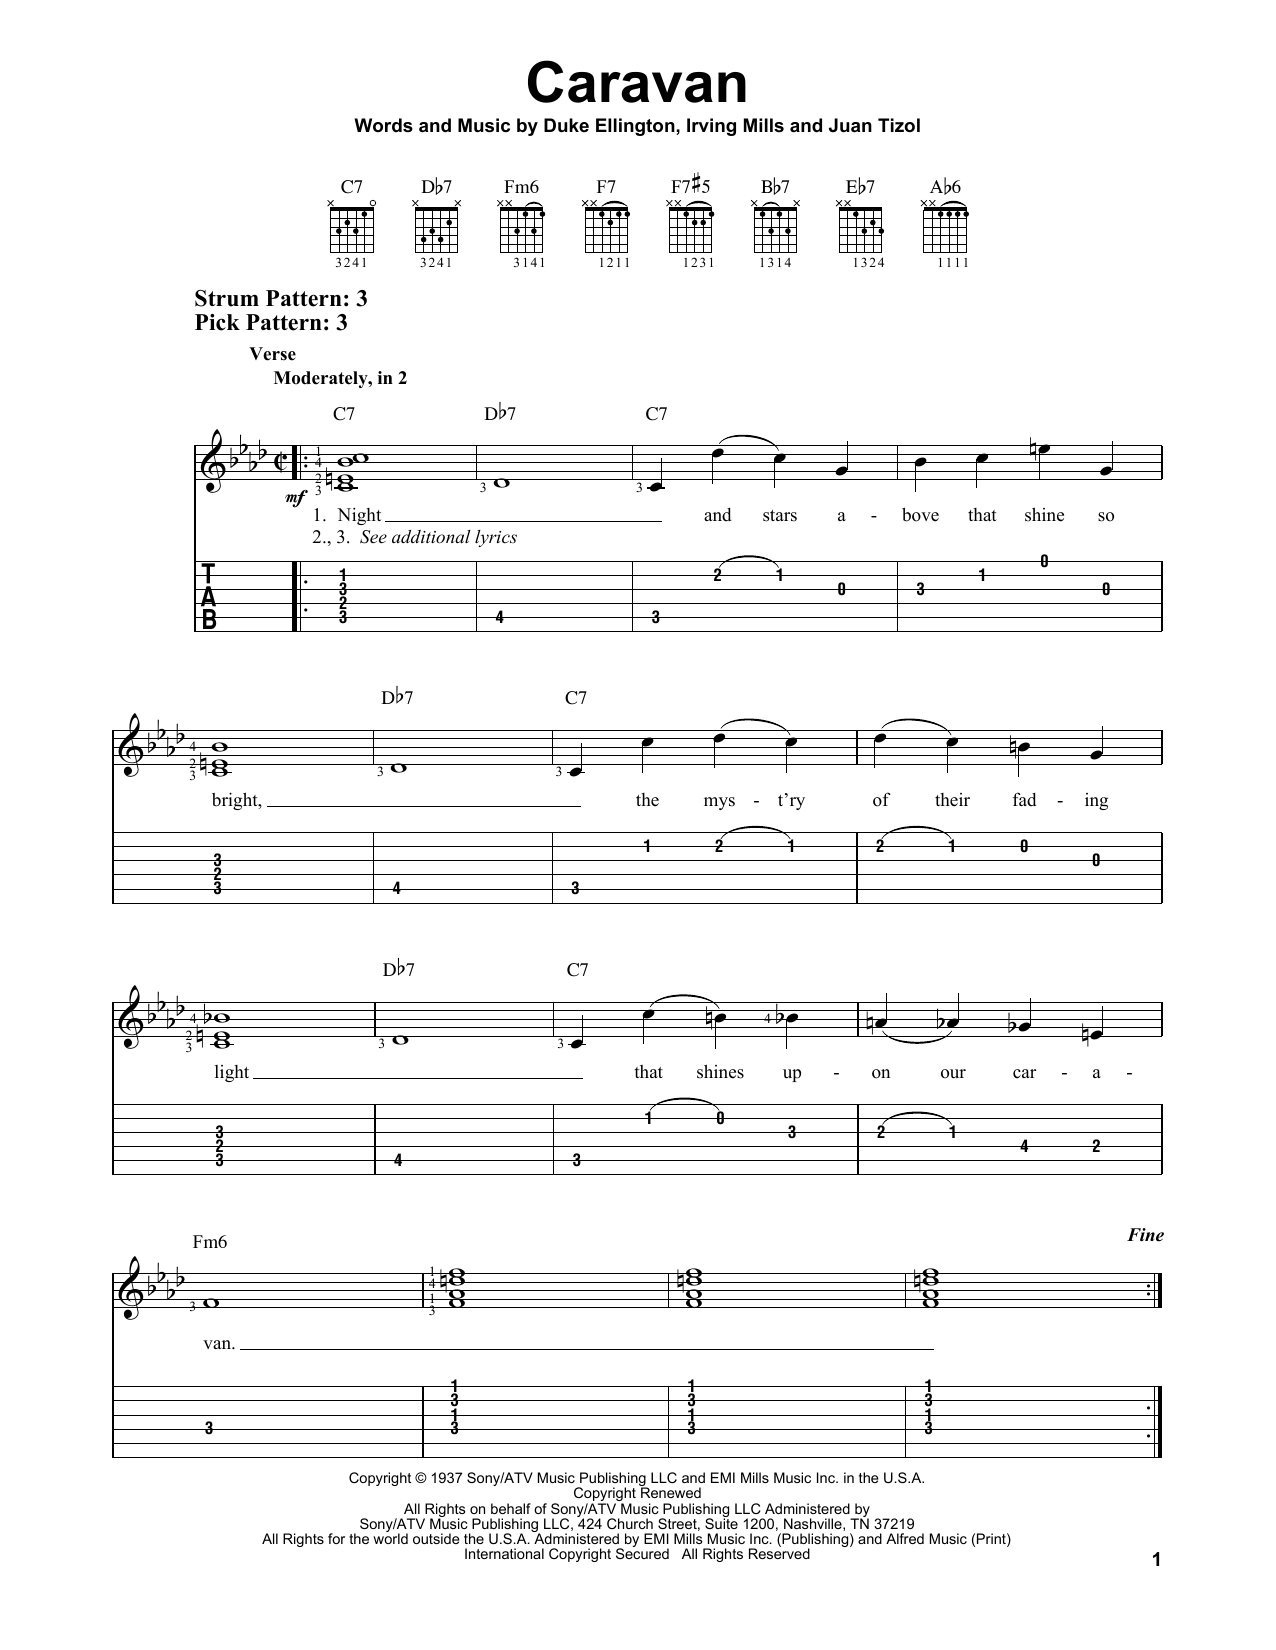 Download Duke Ellington Caravan Sheet Music and learn how to play Easy Guitar Tab PDF digital score in minutes